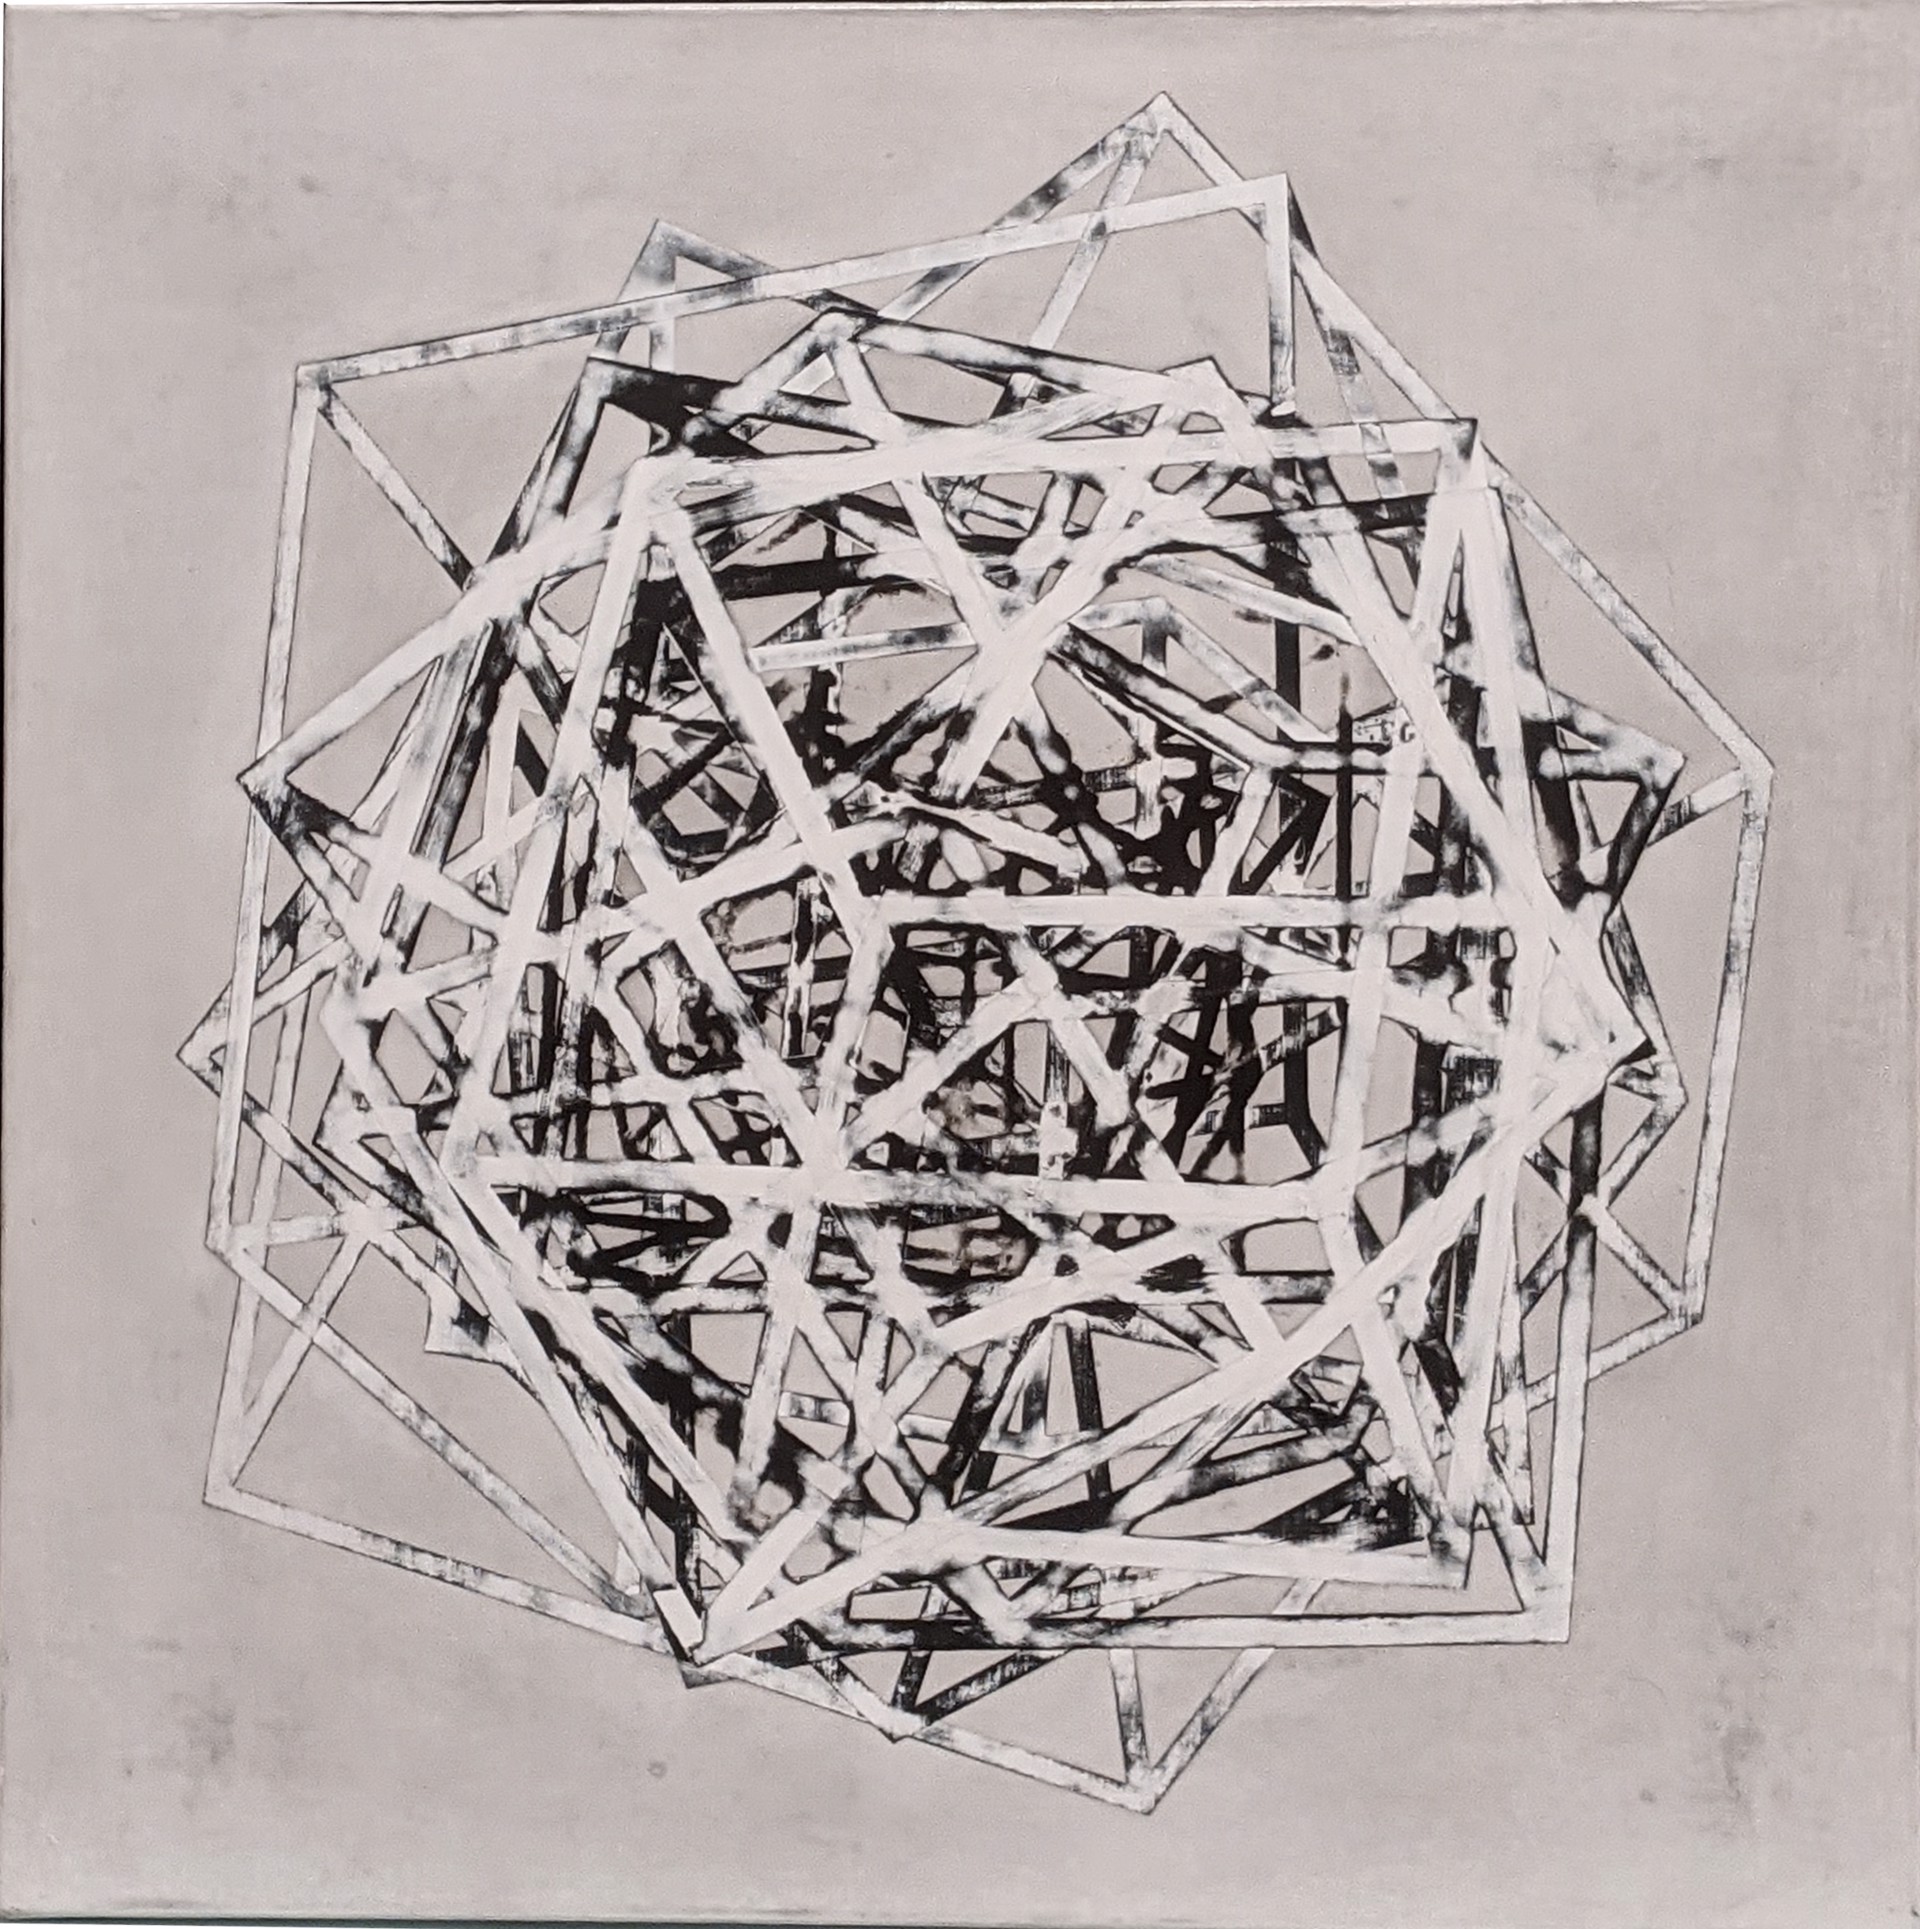 Hexahedron Cluster by Garland Fielder